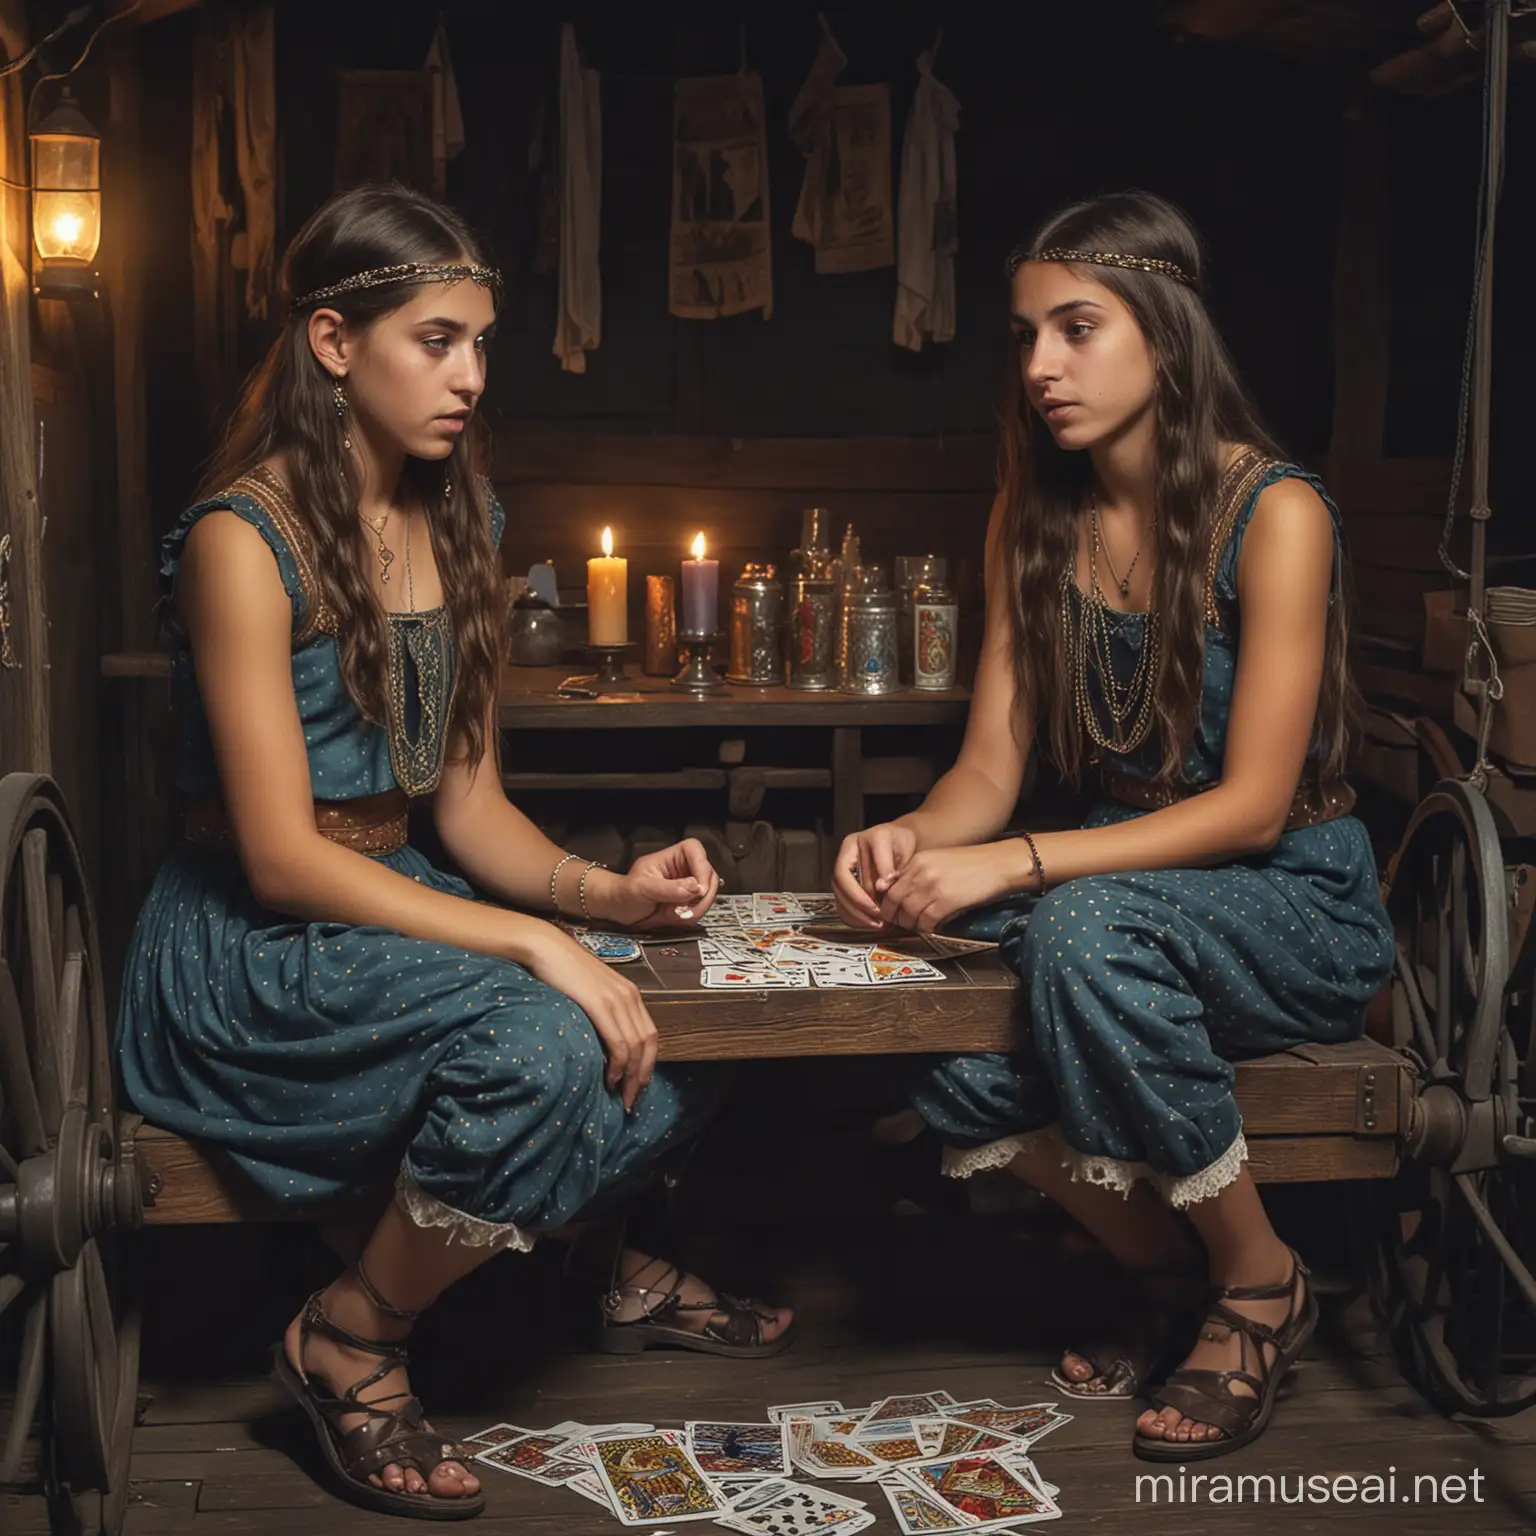 Gypsy Girls Playing Tarot Cards in Wagon Interior at Night